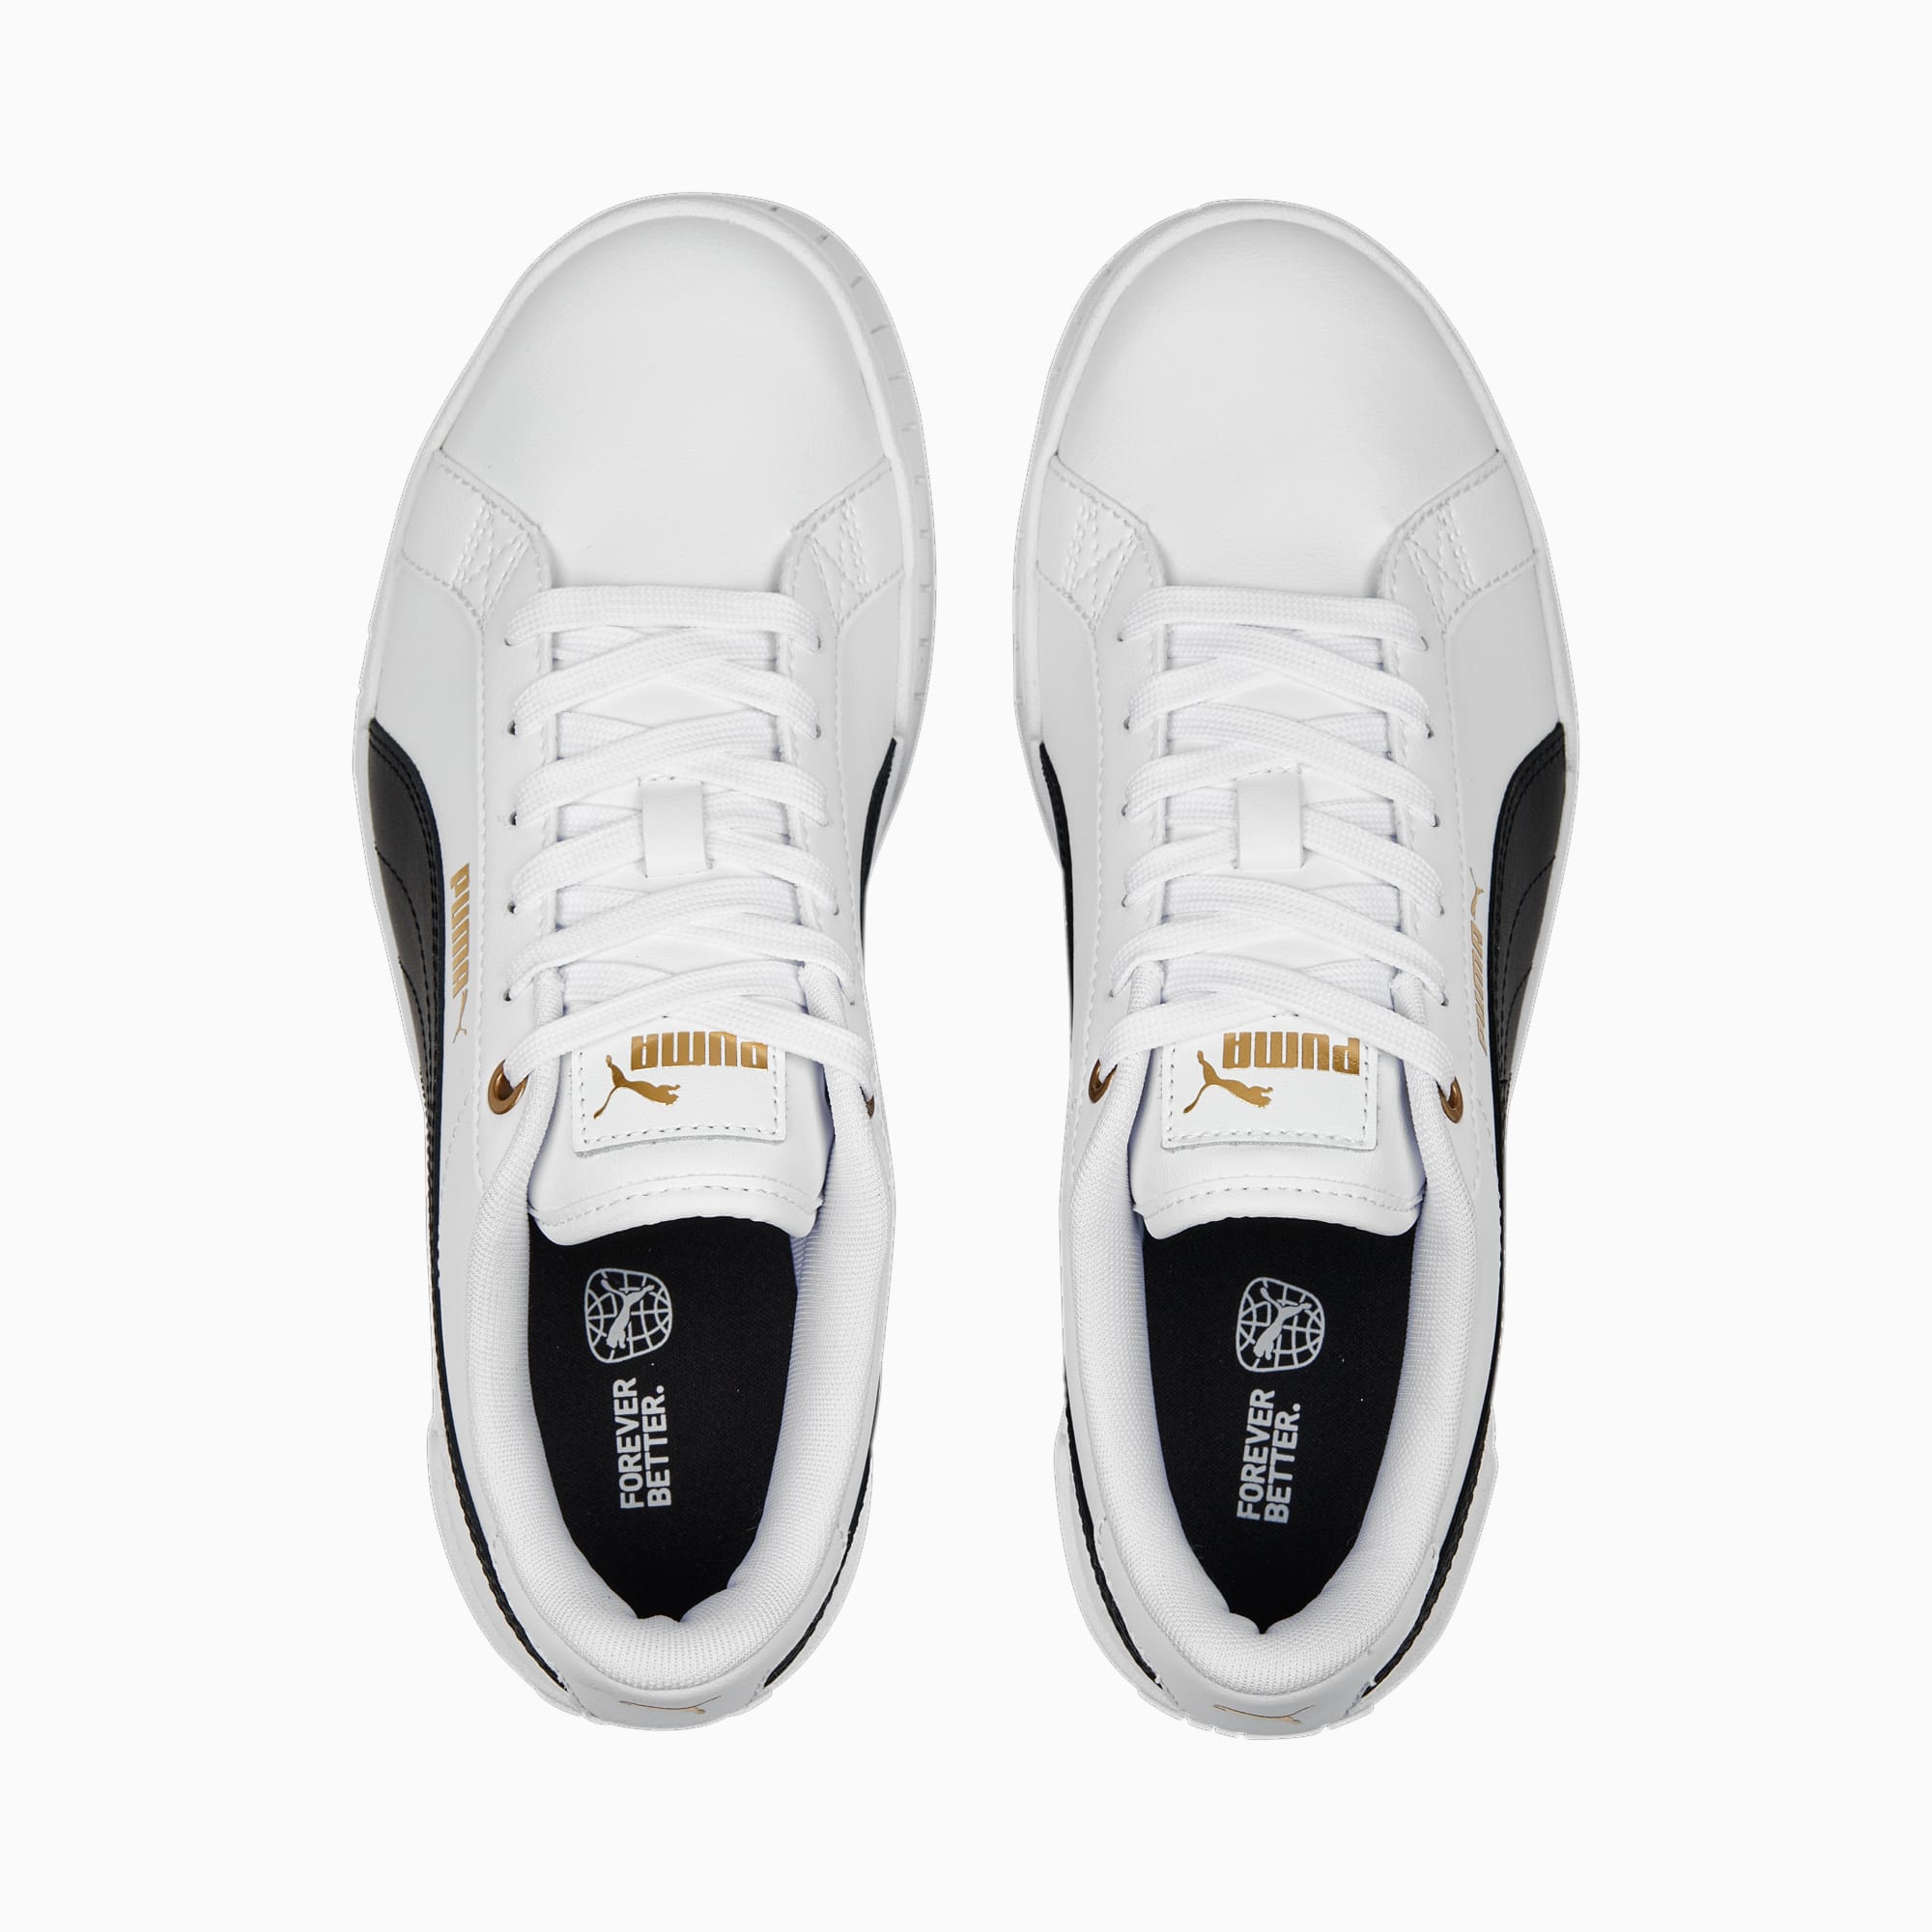 PUMA Karmen Wedge Sneakers Women, White/Black/Gold, Size 35,5, Shoes